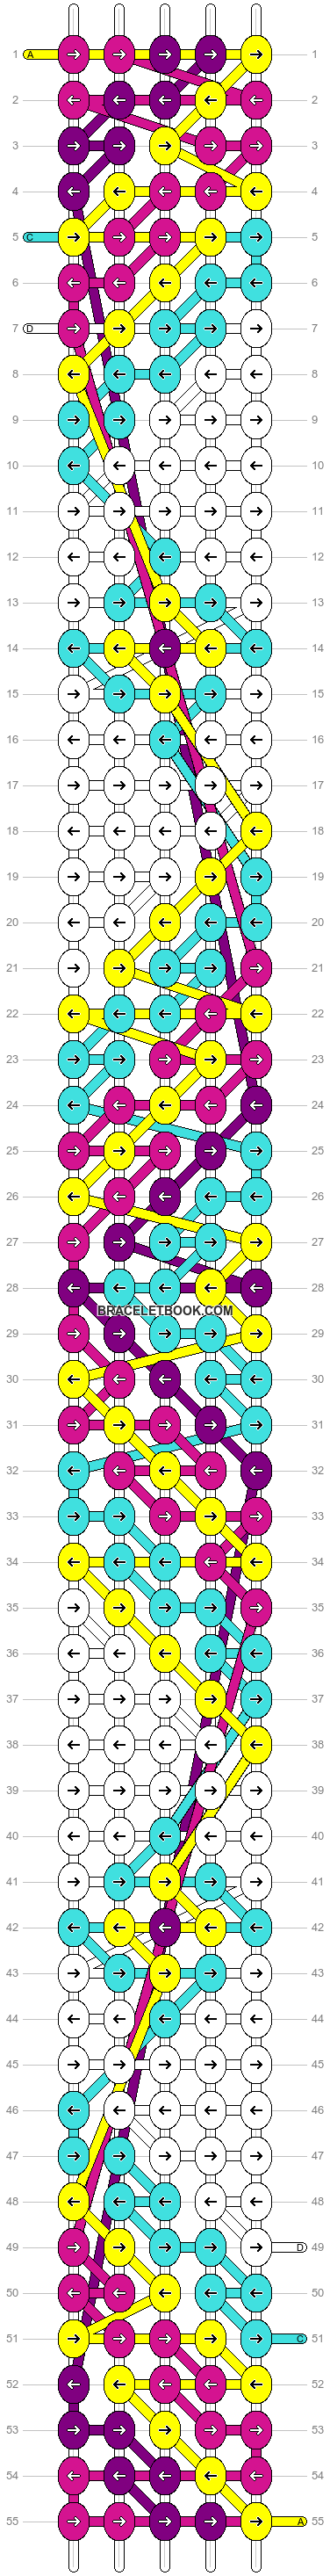 Alpha pattern #11196 variation #84062 pattern